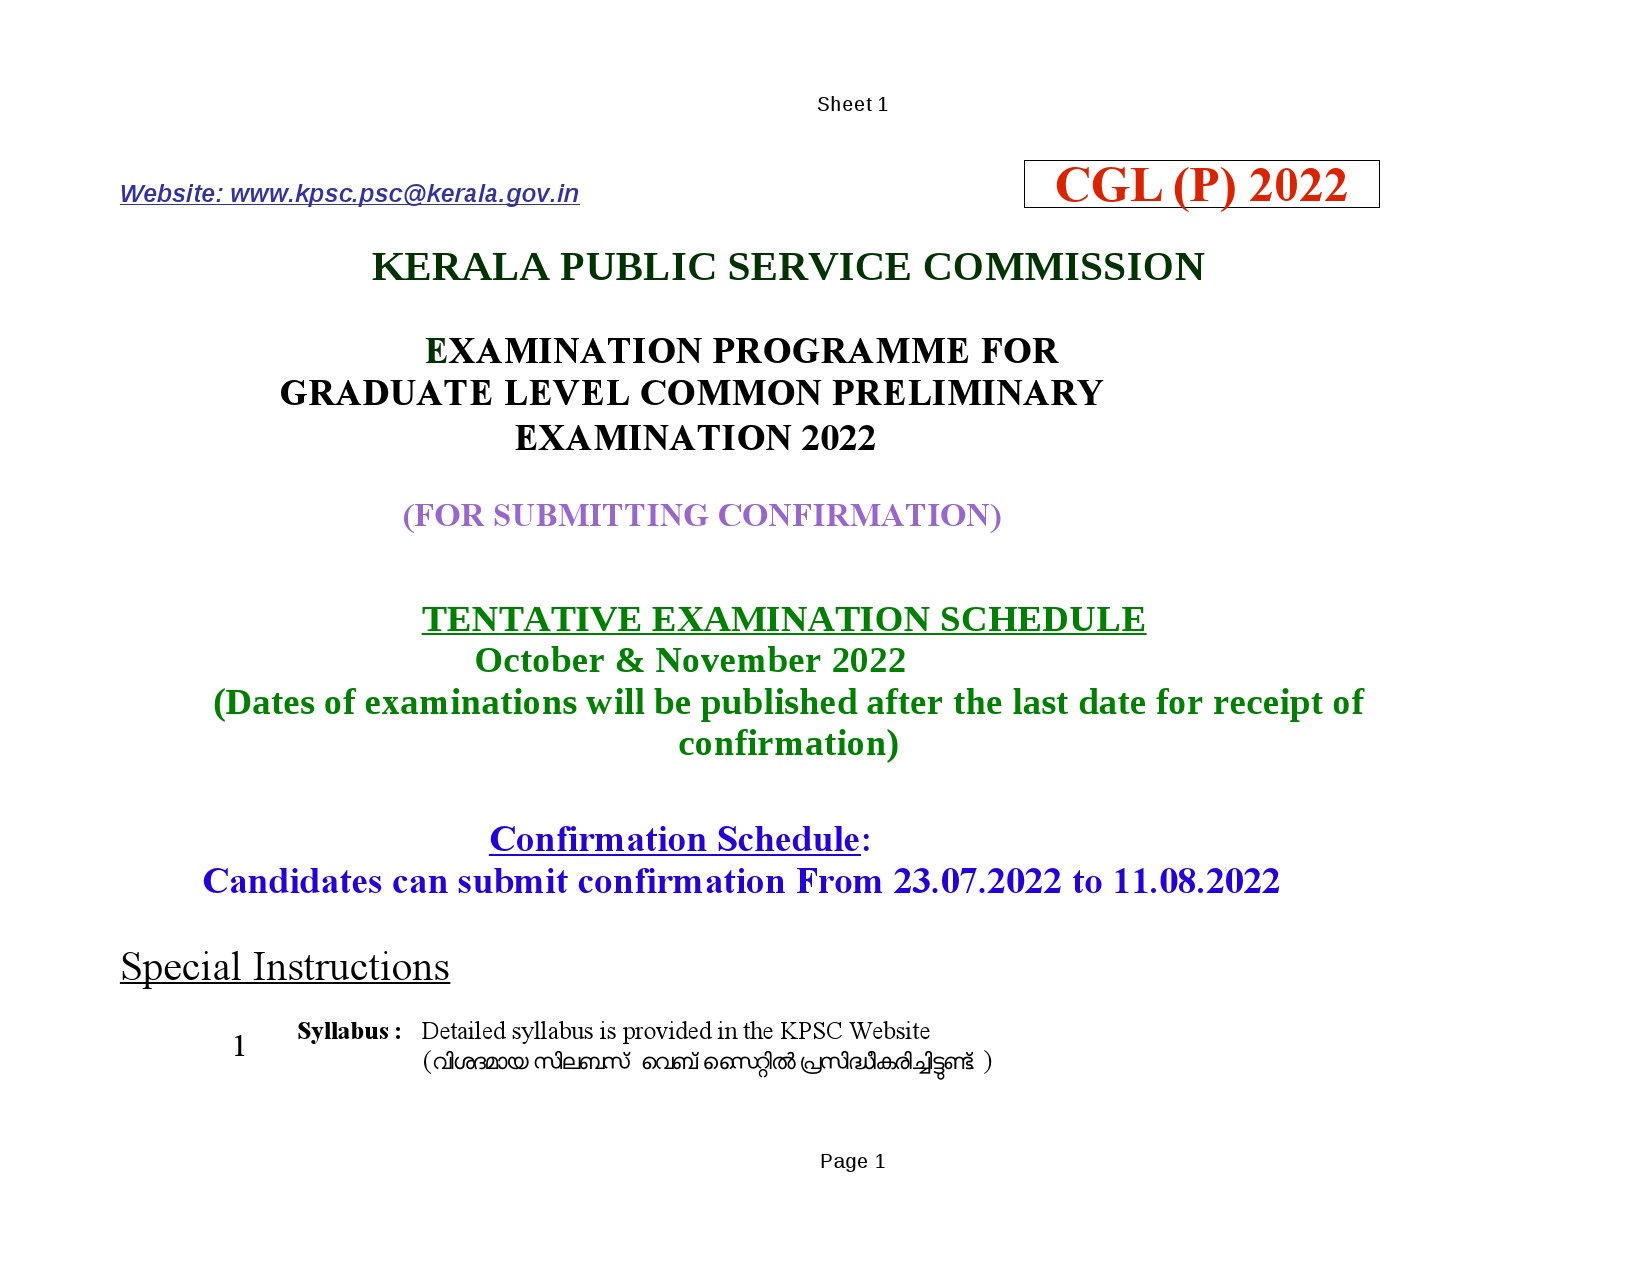 Exam For Graduate Level Common Preliminary Examination 2022 - Notification Image 1